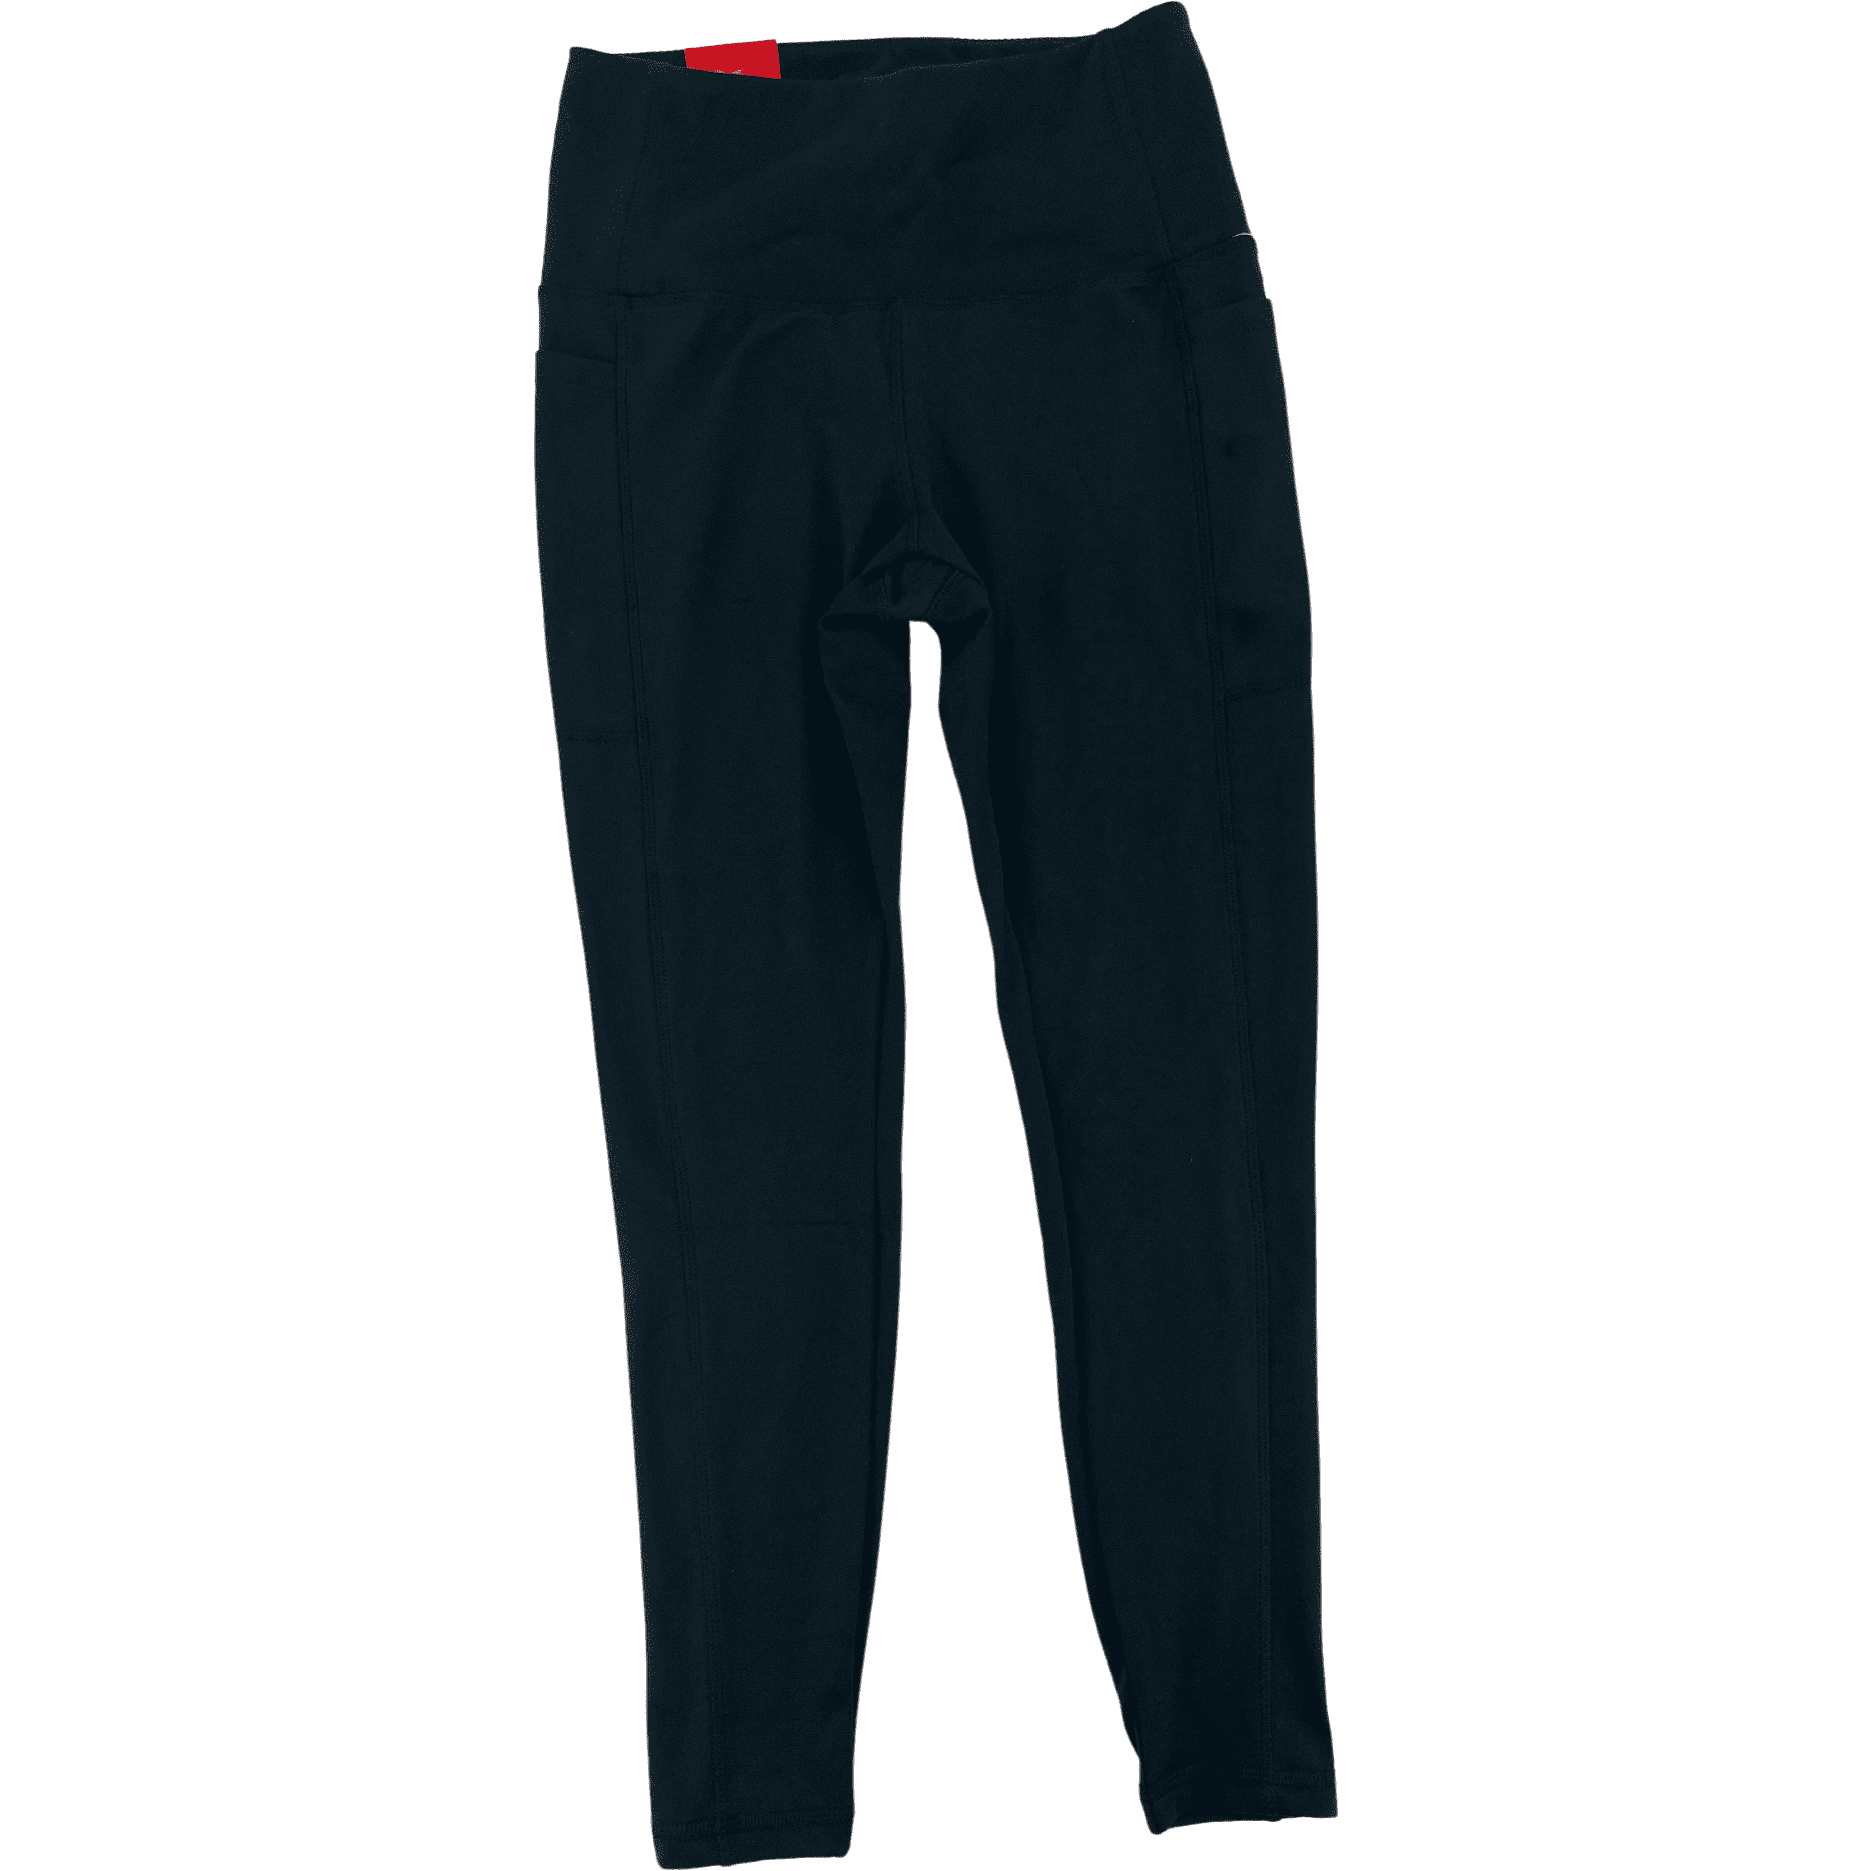 Danskin Women's 7/8 Leggings / Women's Lounge Pants / Black / Size Medium